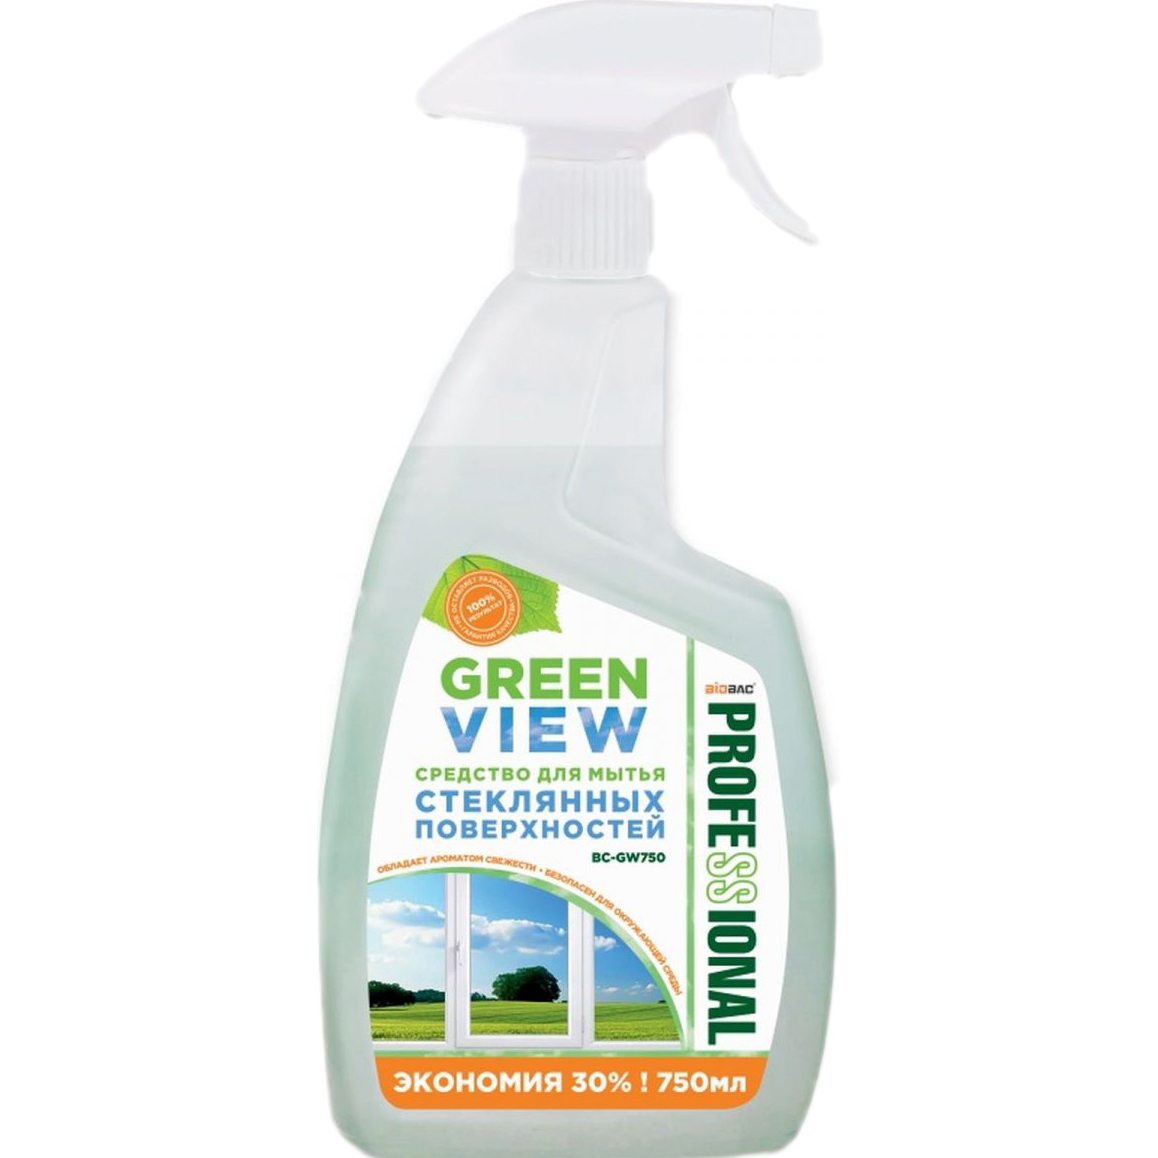 Средство для мытья Biobac Green View Для стеклянных поверхностей 750 мл средство для мытья biobac green view для стеклянных поверхностей 750 мл